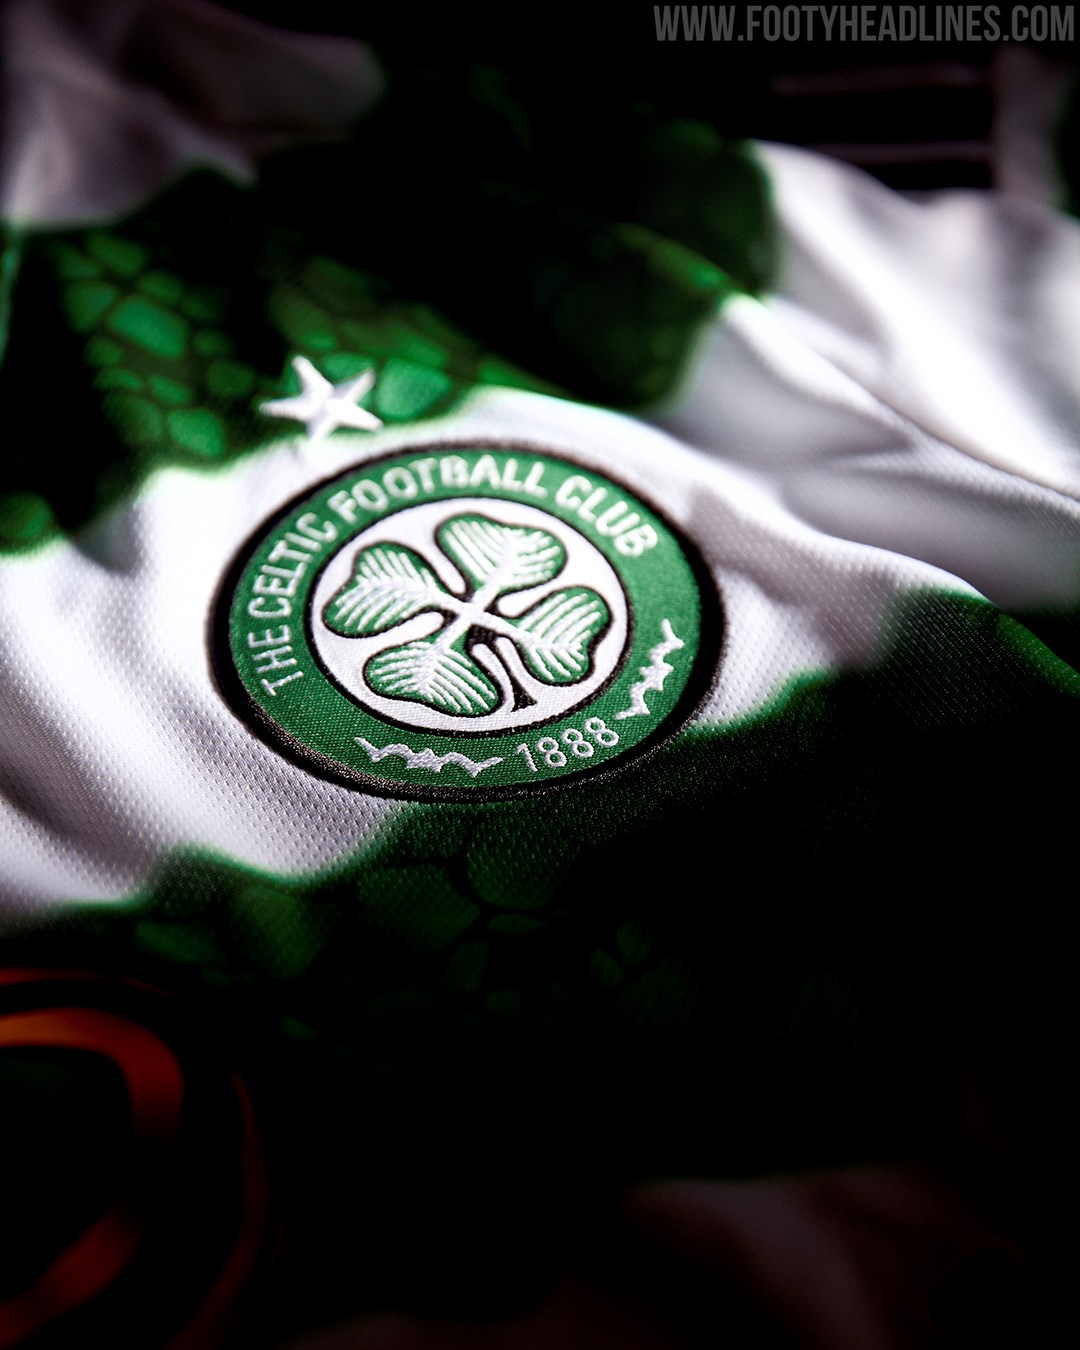 Celtic 23-24 Away Kit Leaked? - Footy Headlines